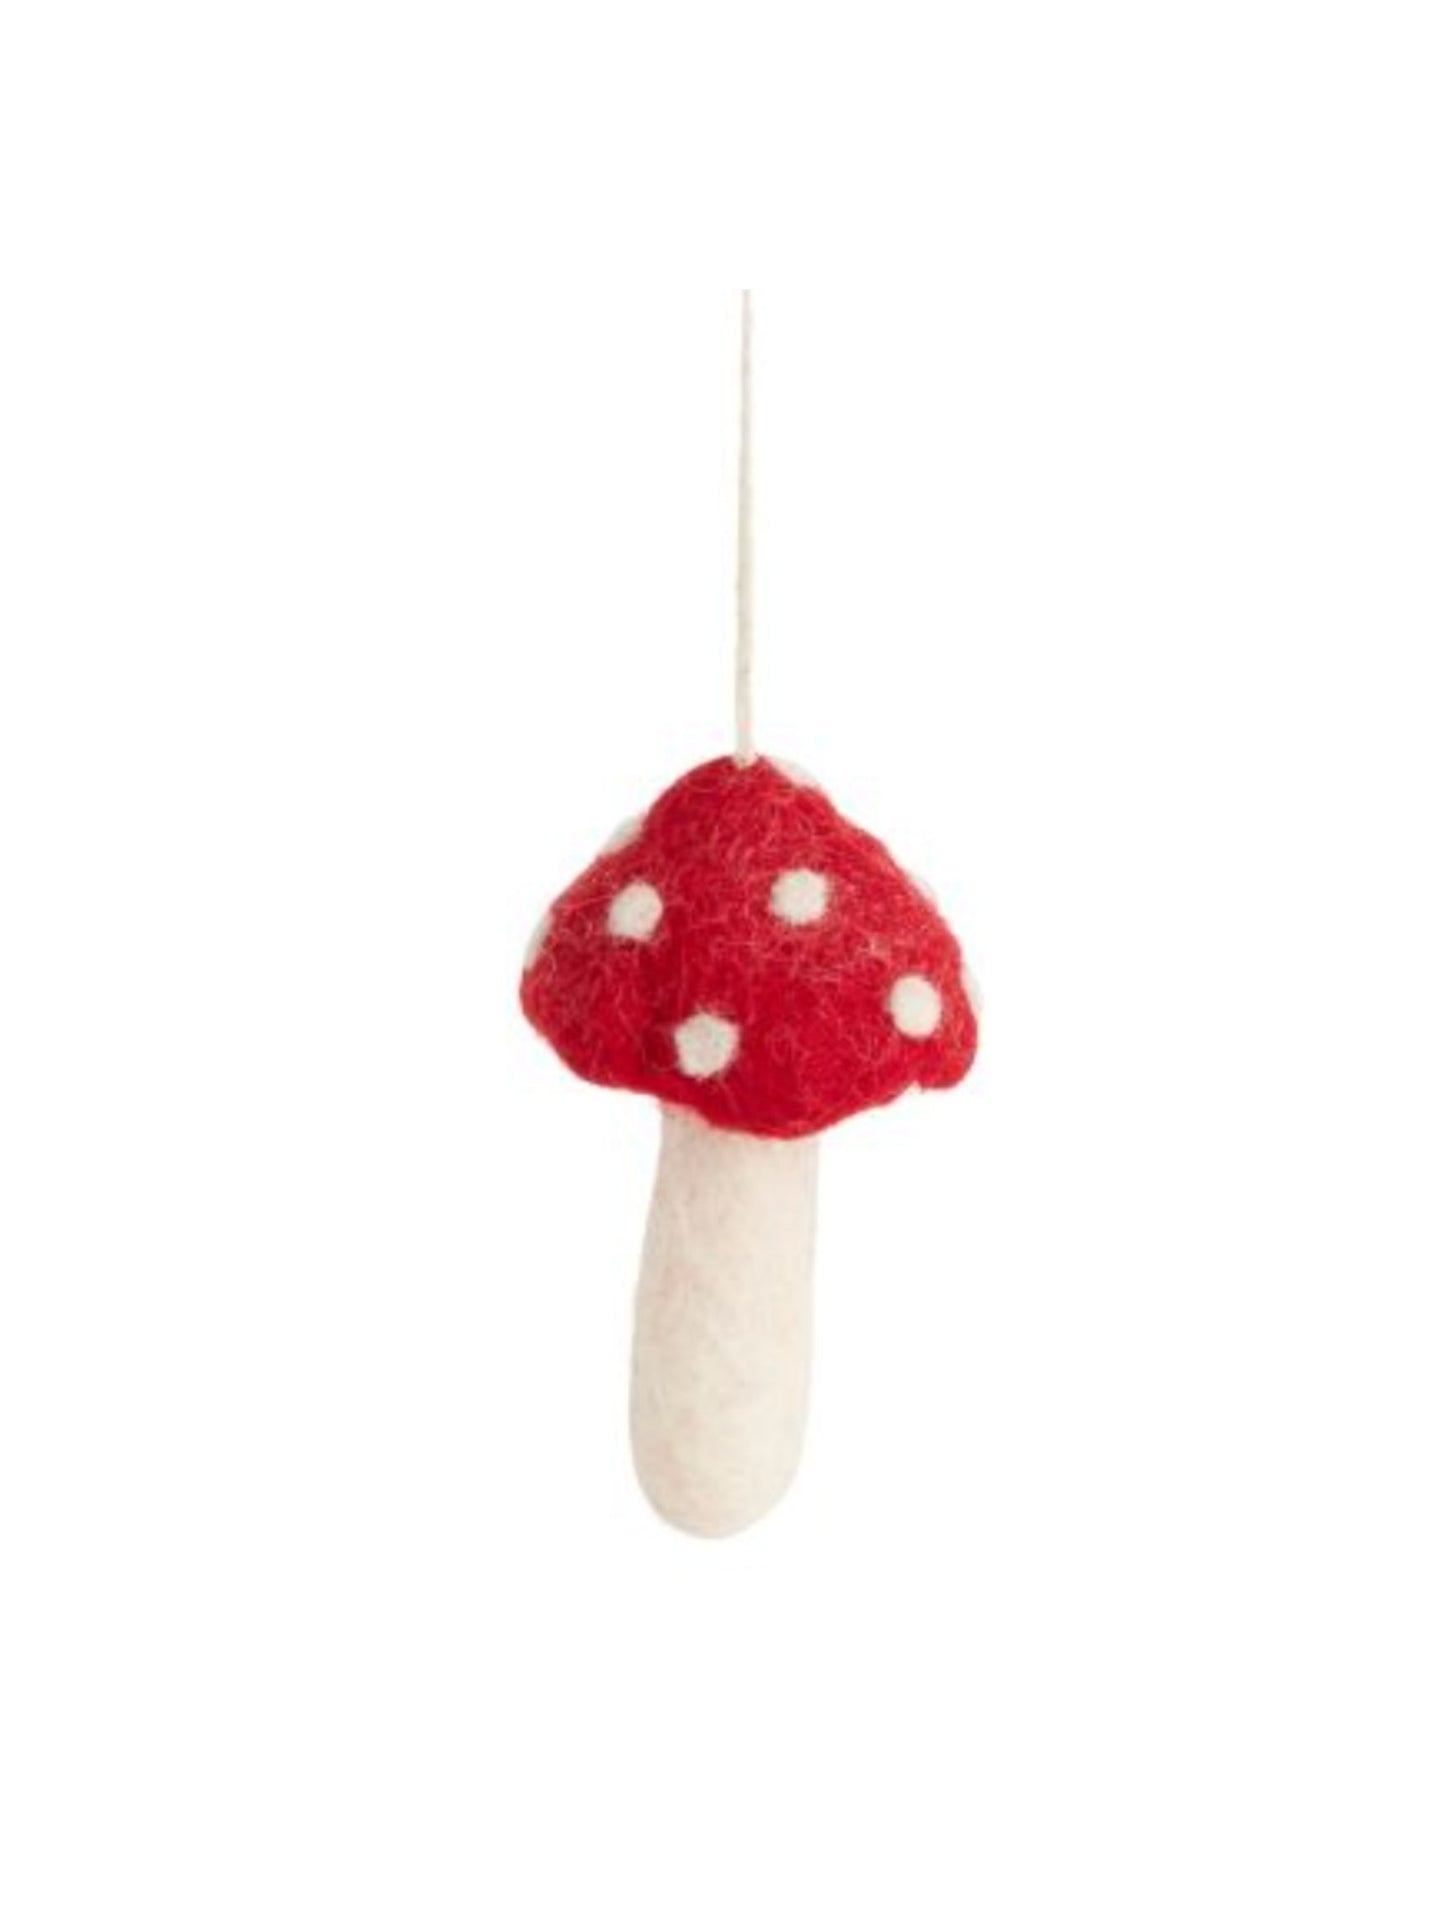 Felt Fungi Ornament - Polka Dot Top